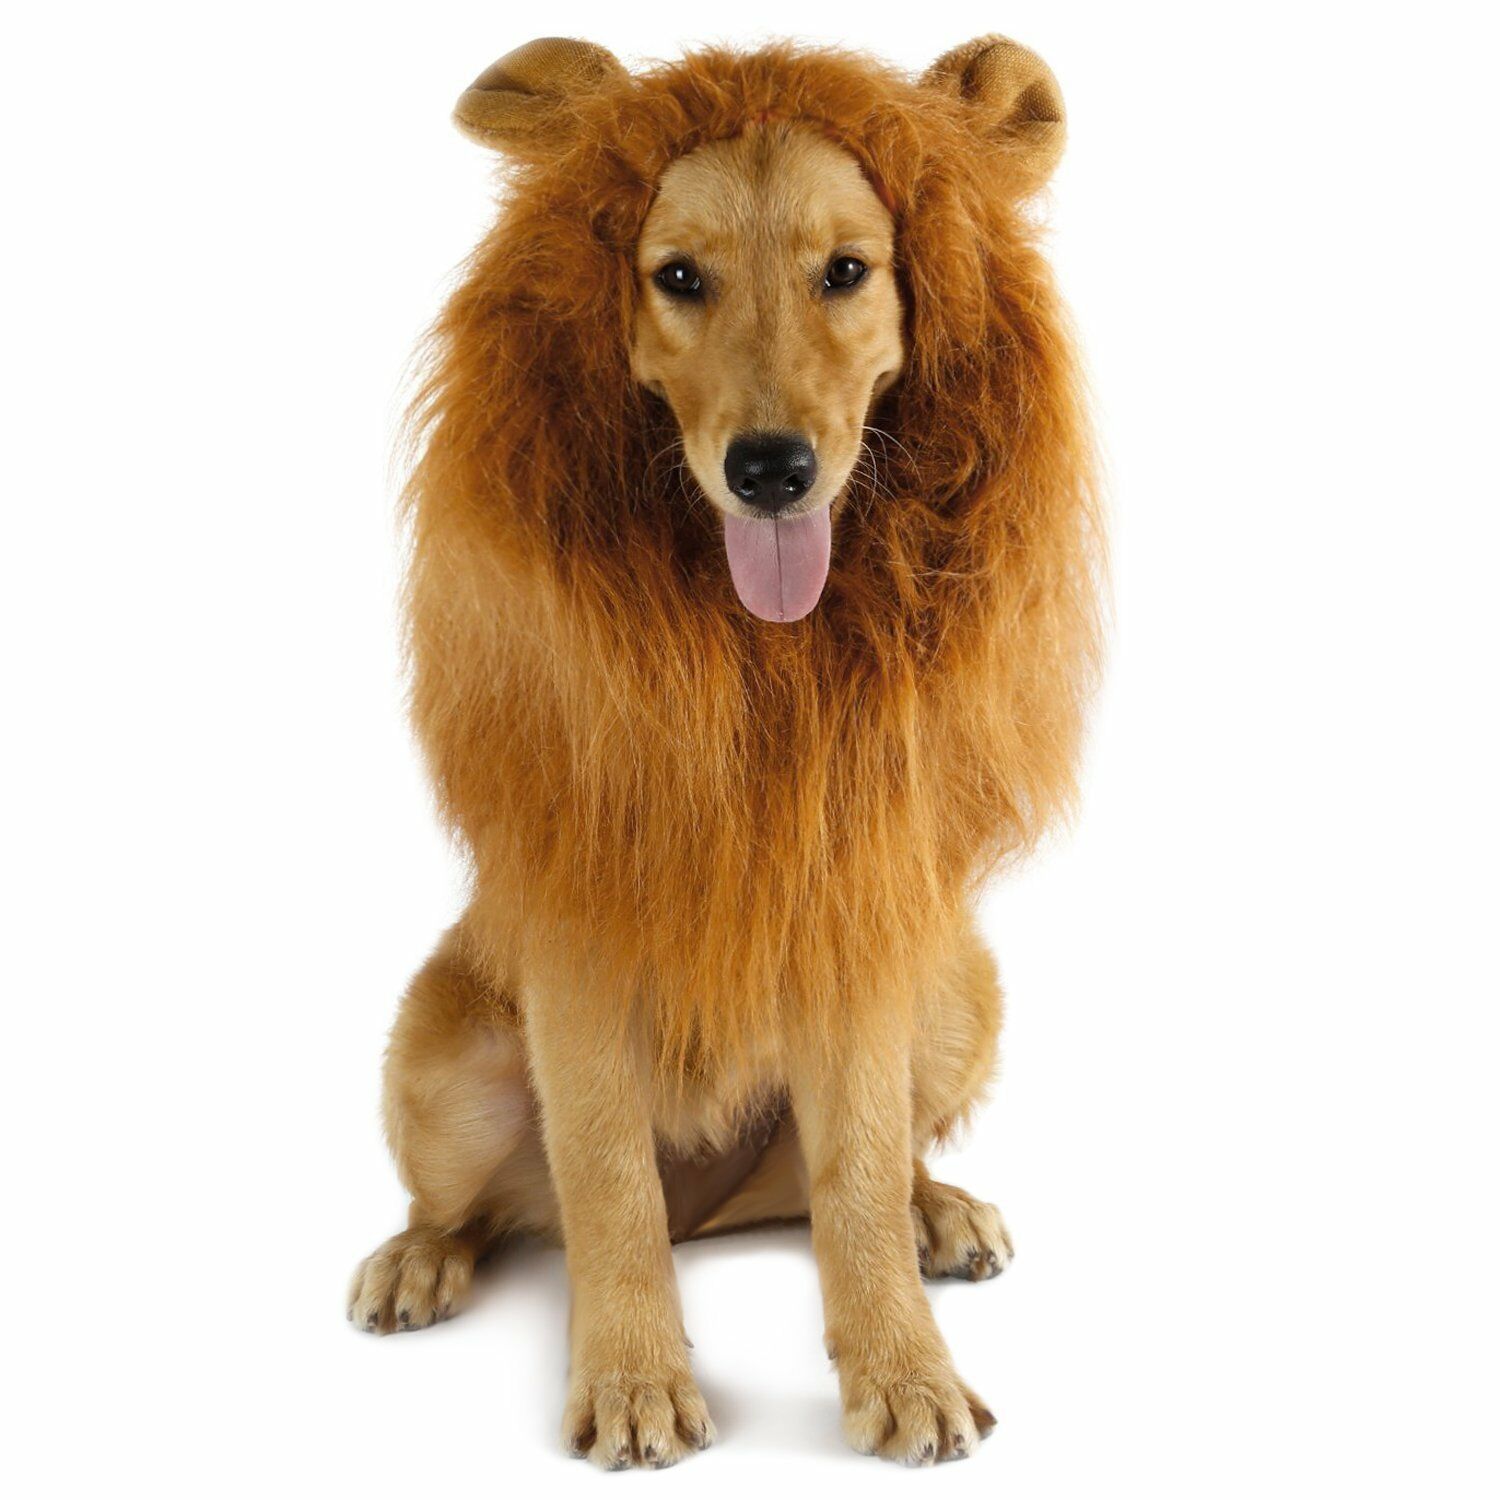 Pet Costume Lion Mane Wig W/ Ears For Large Dog Halloween Clothe Fancy Dress Up